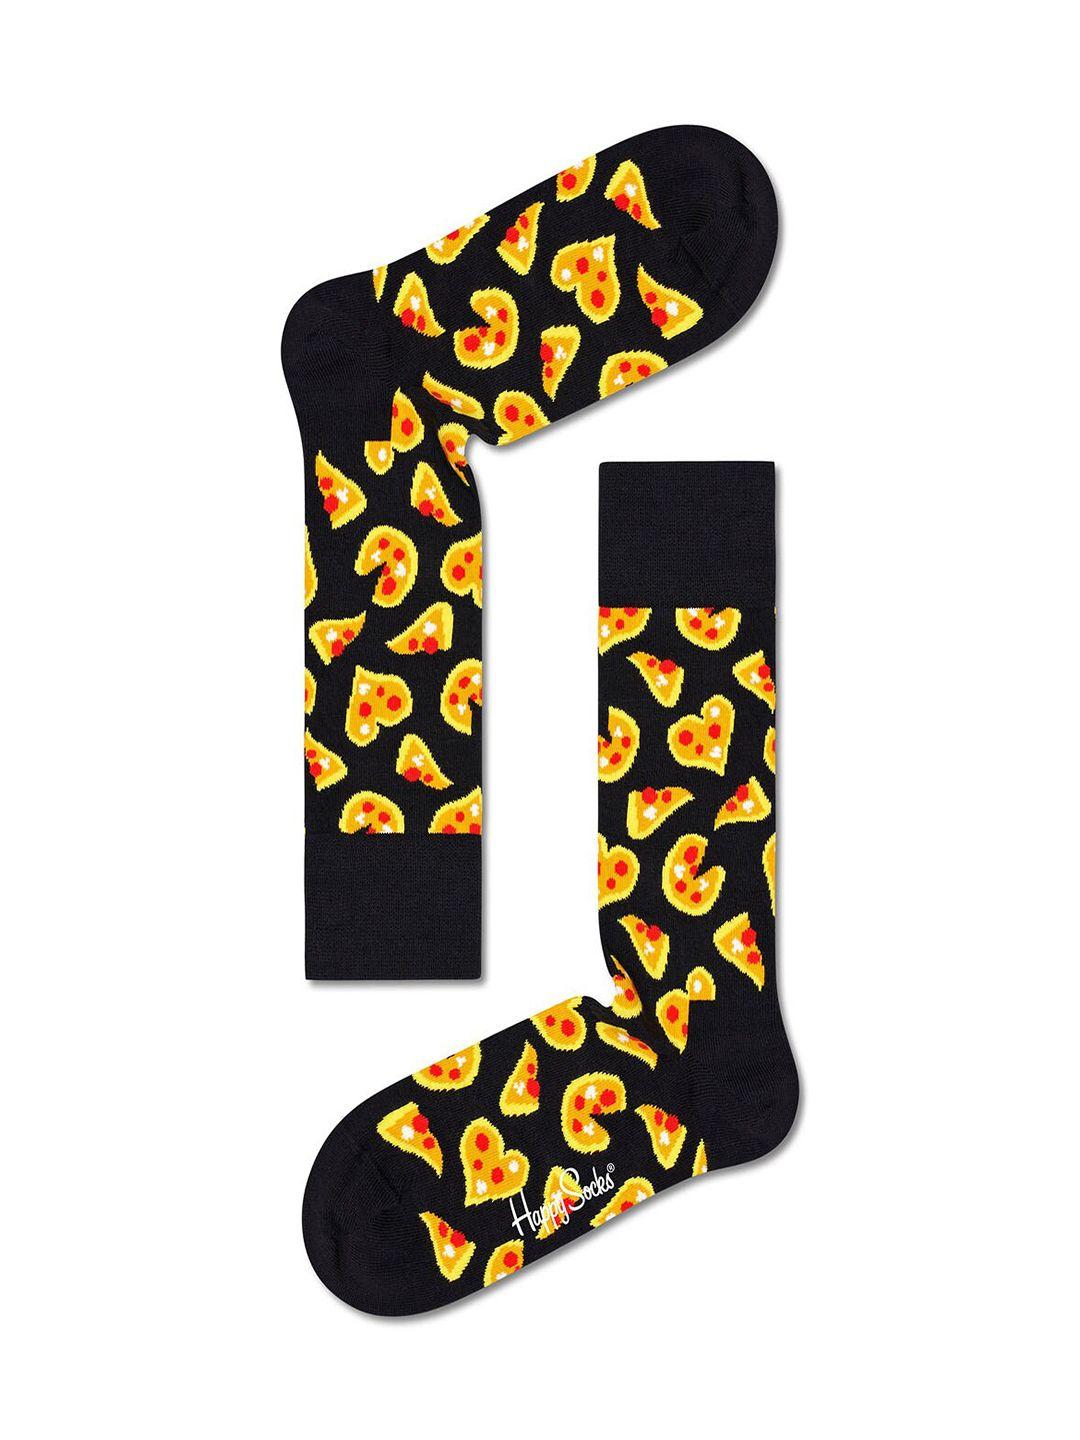 happy socks unisex black & yellow patterned cotton calf-length socks